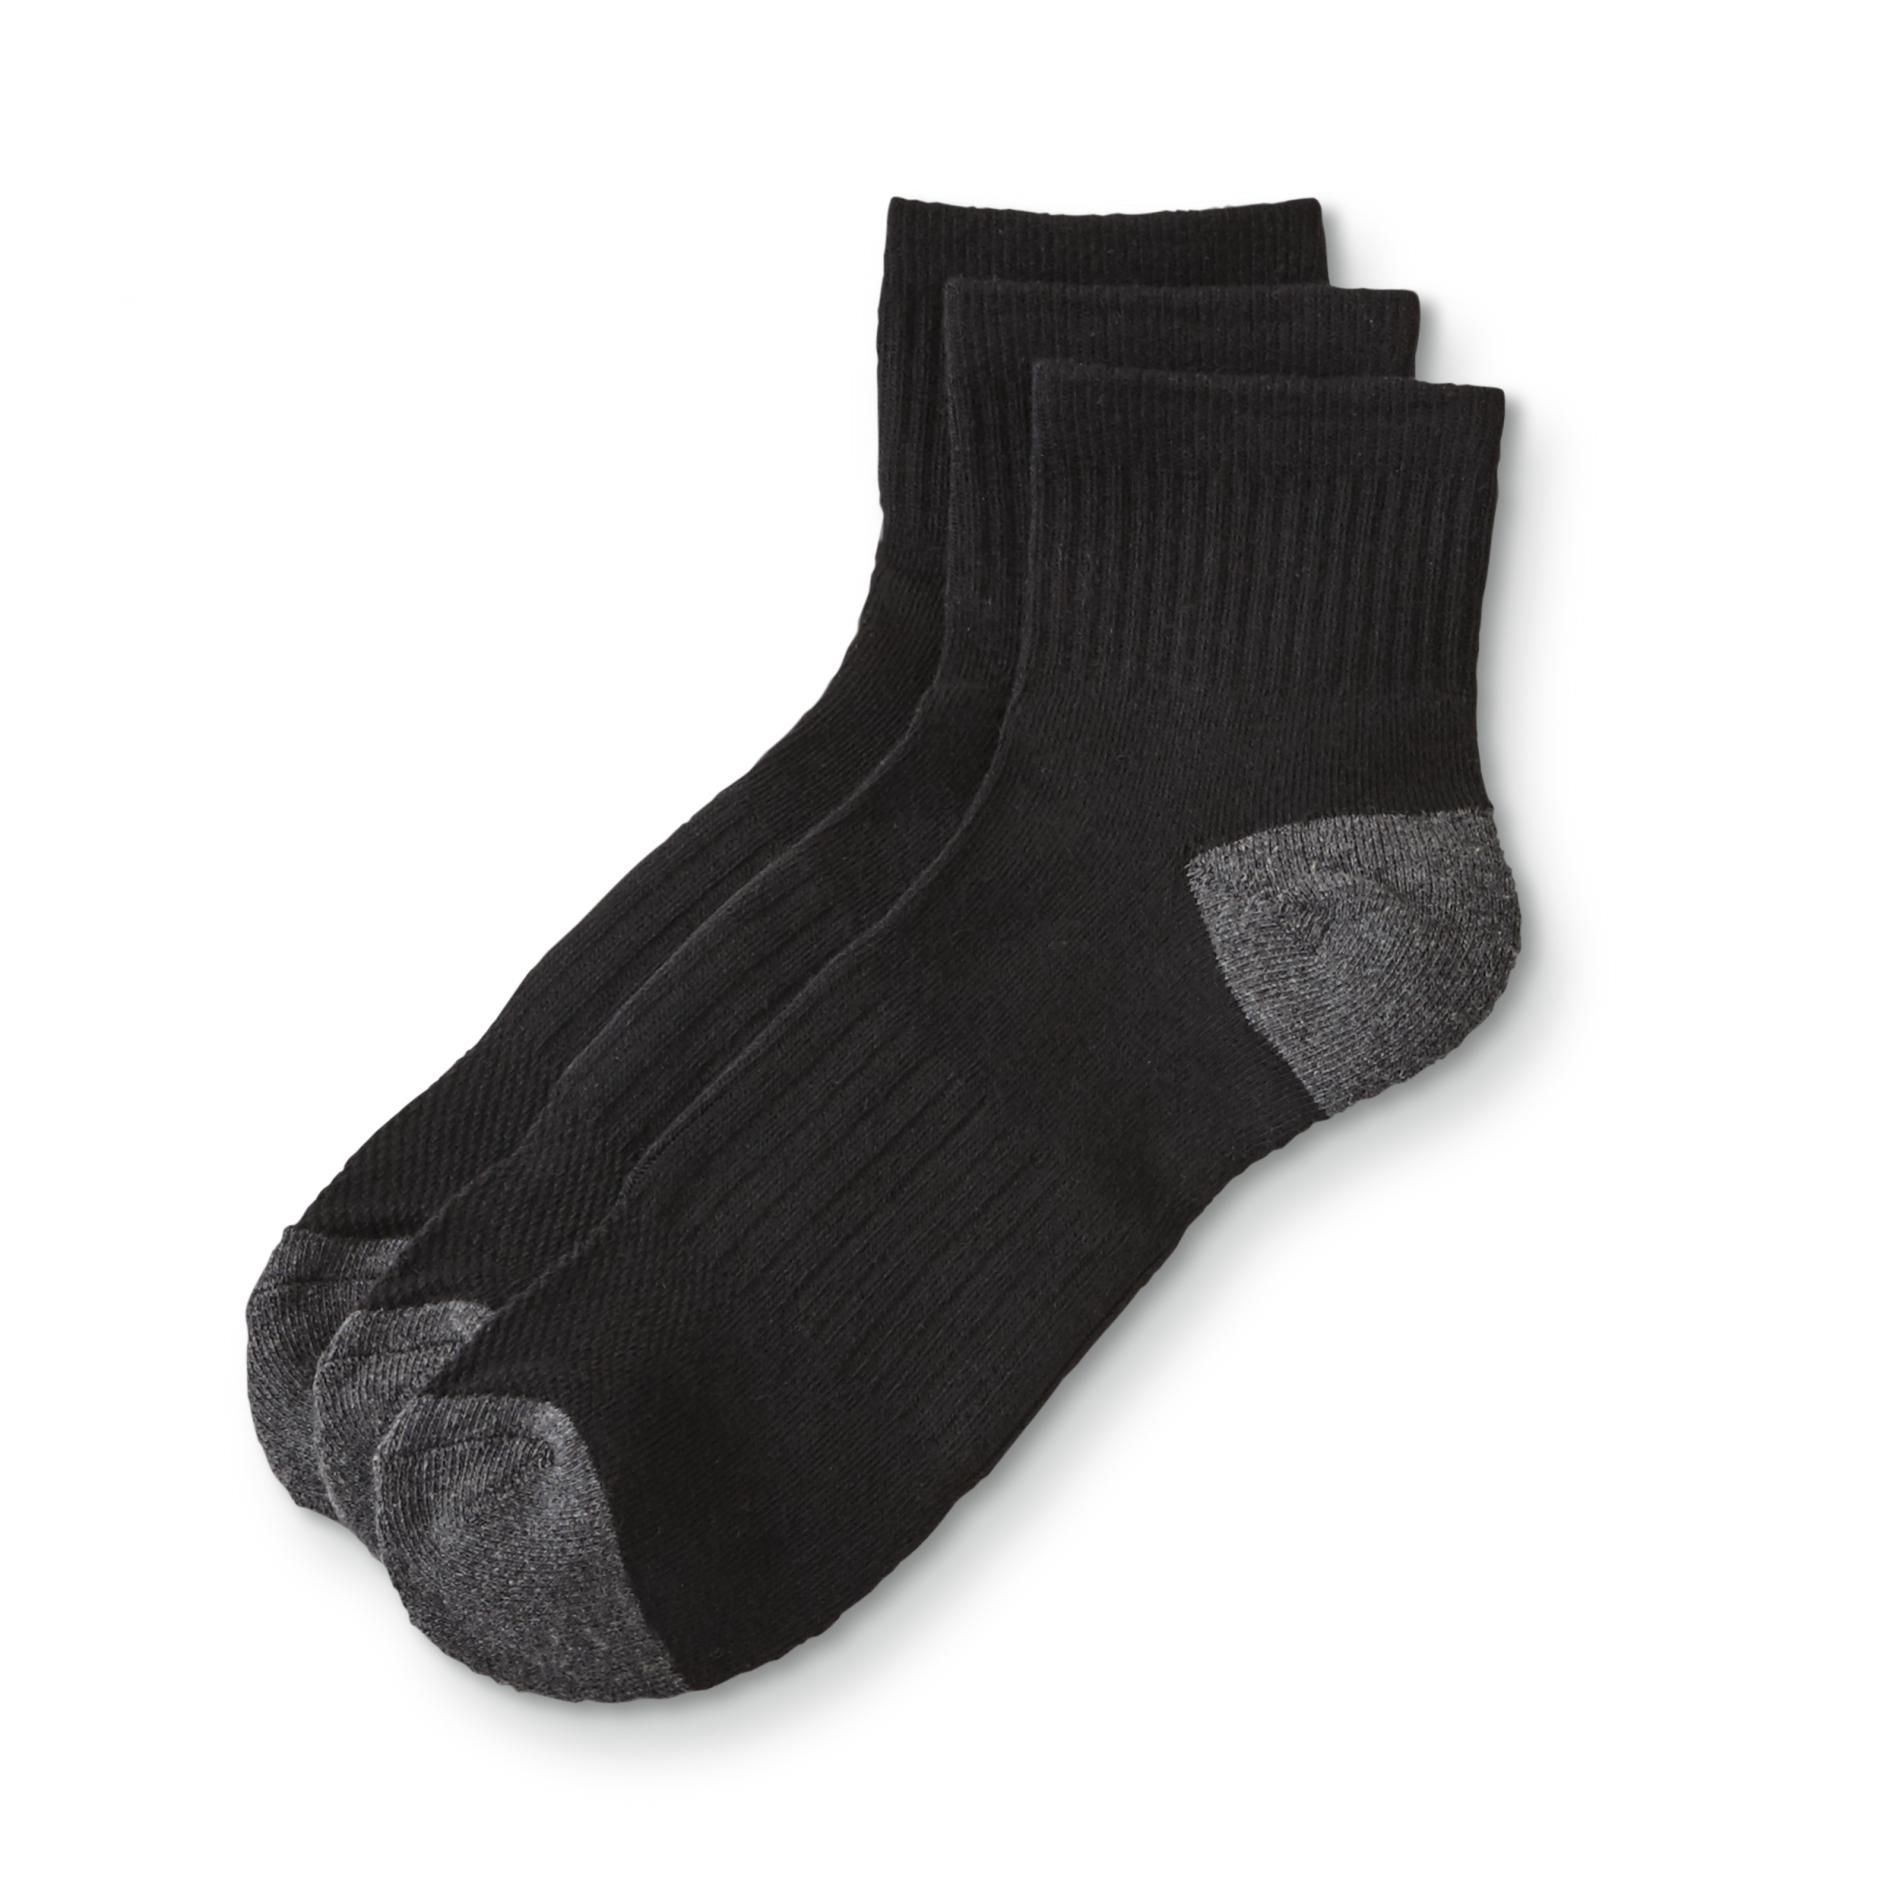 Kodiak Men's 3-Pairs Quarter Socks - Colorblock